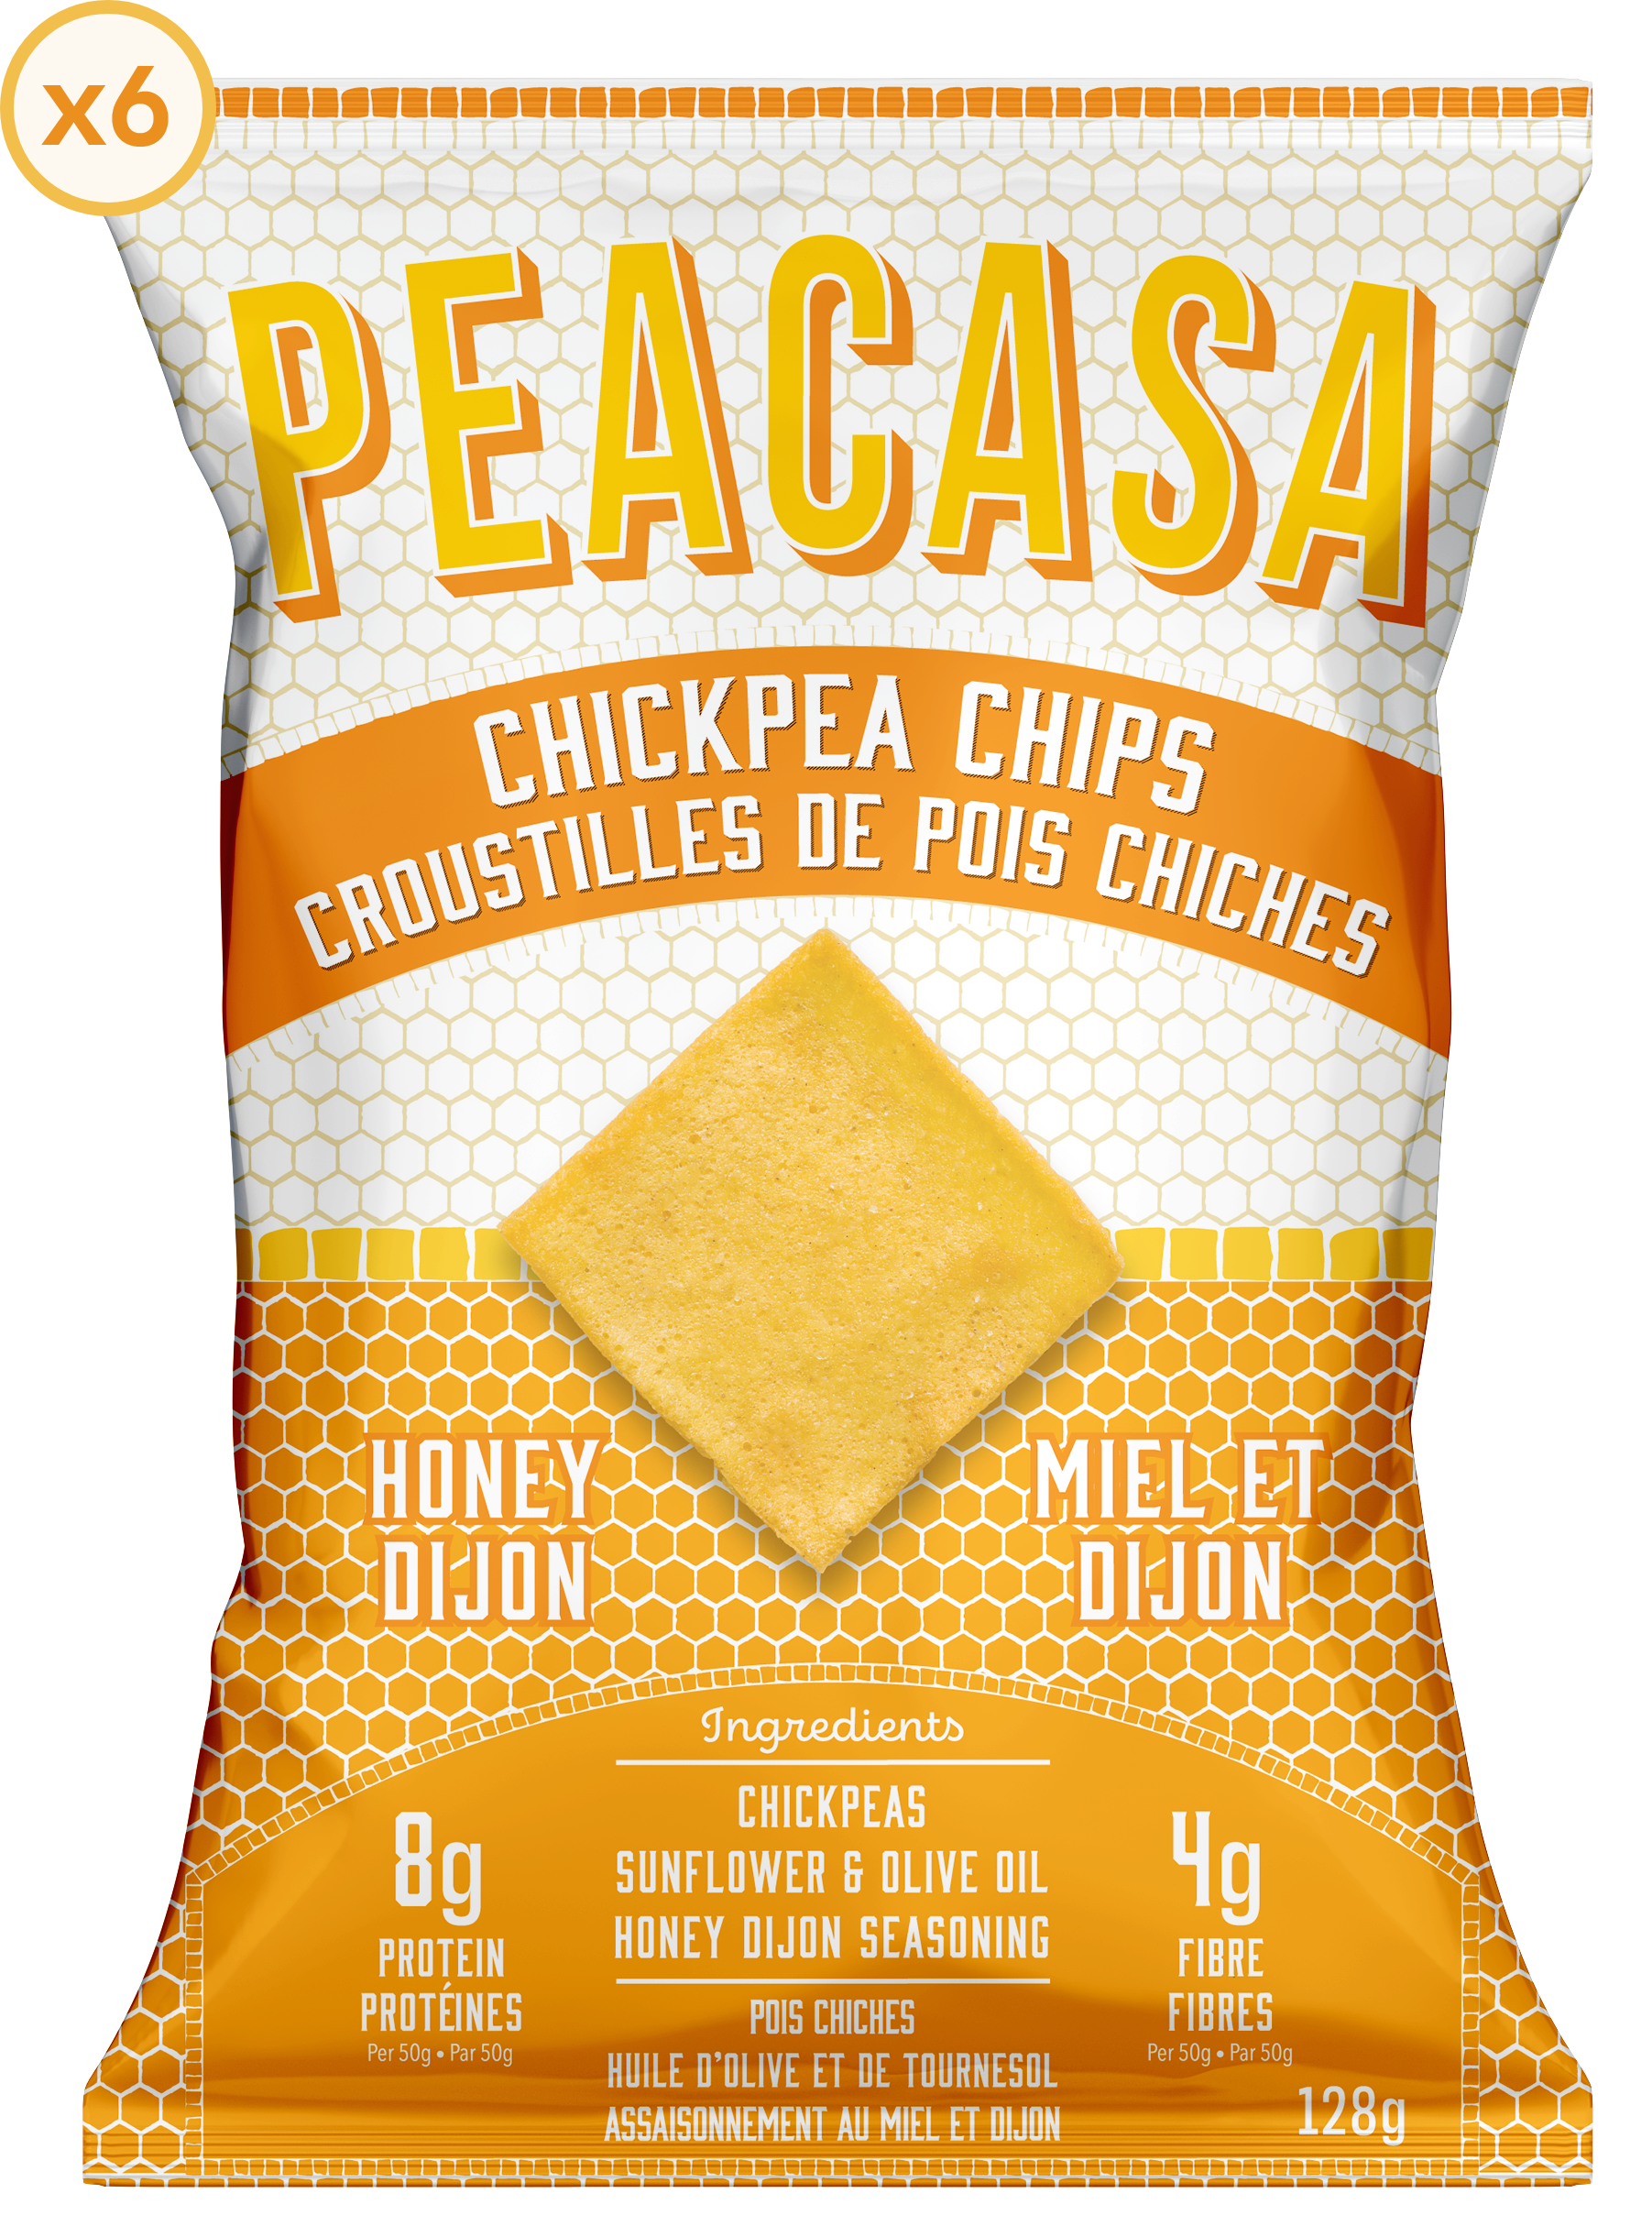 Peacasa Chickpea Chips